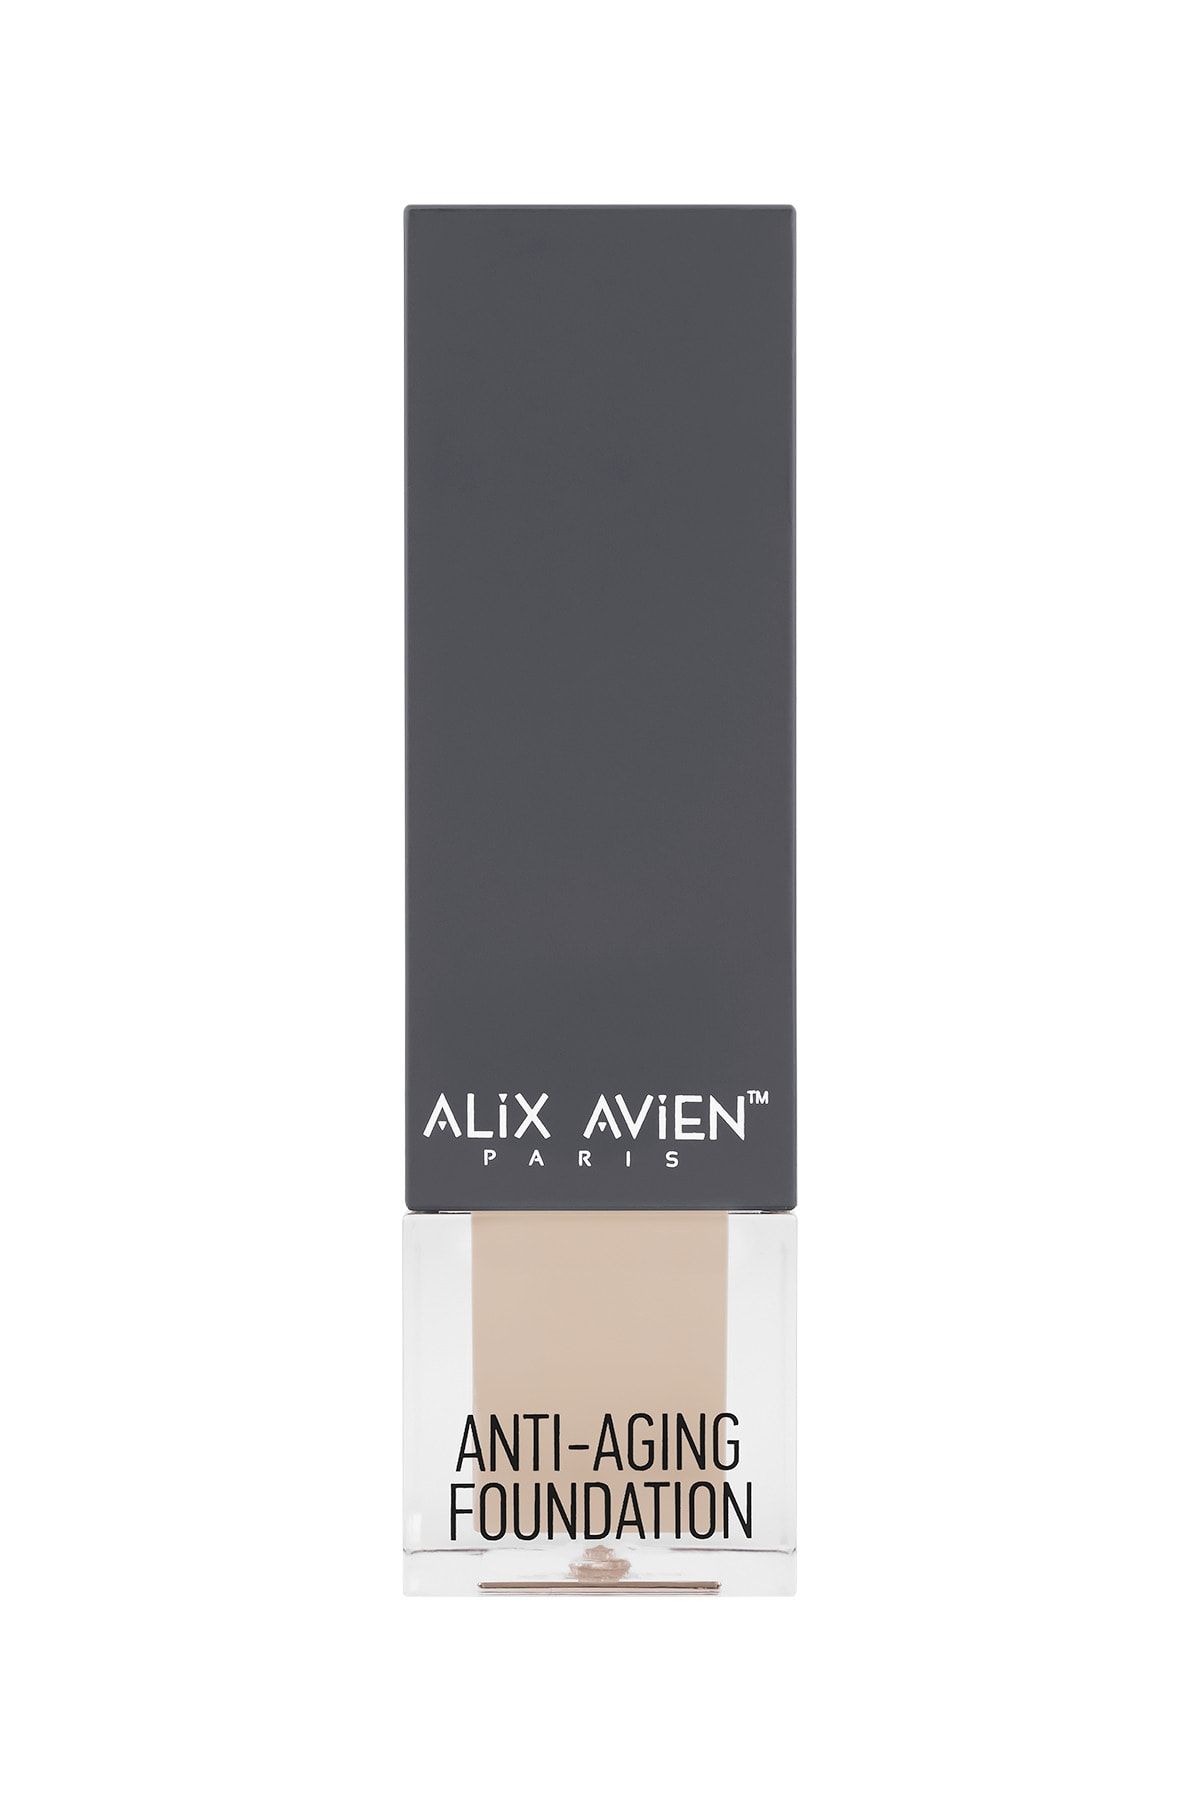 Alix Avien پایه ضد پیری با SPF 15 و رنگ طبیعی بوف باف 507 35 میلی لیتر